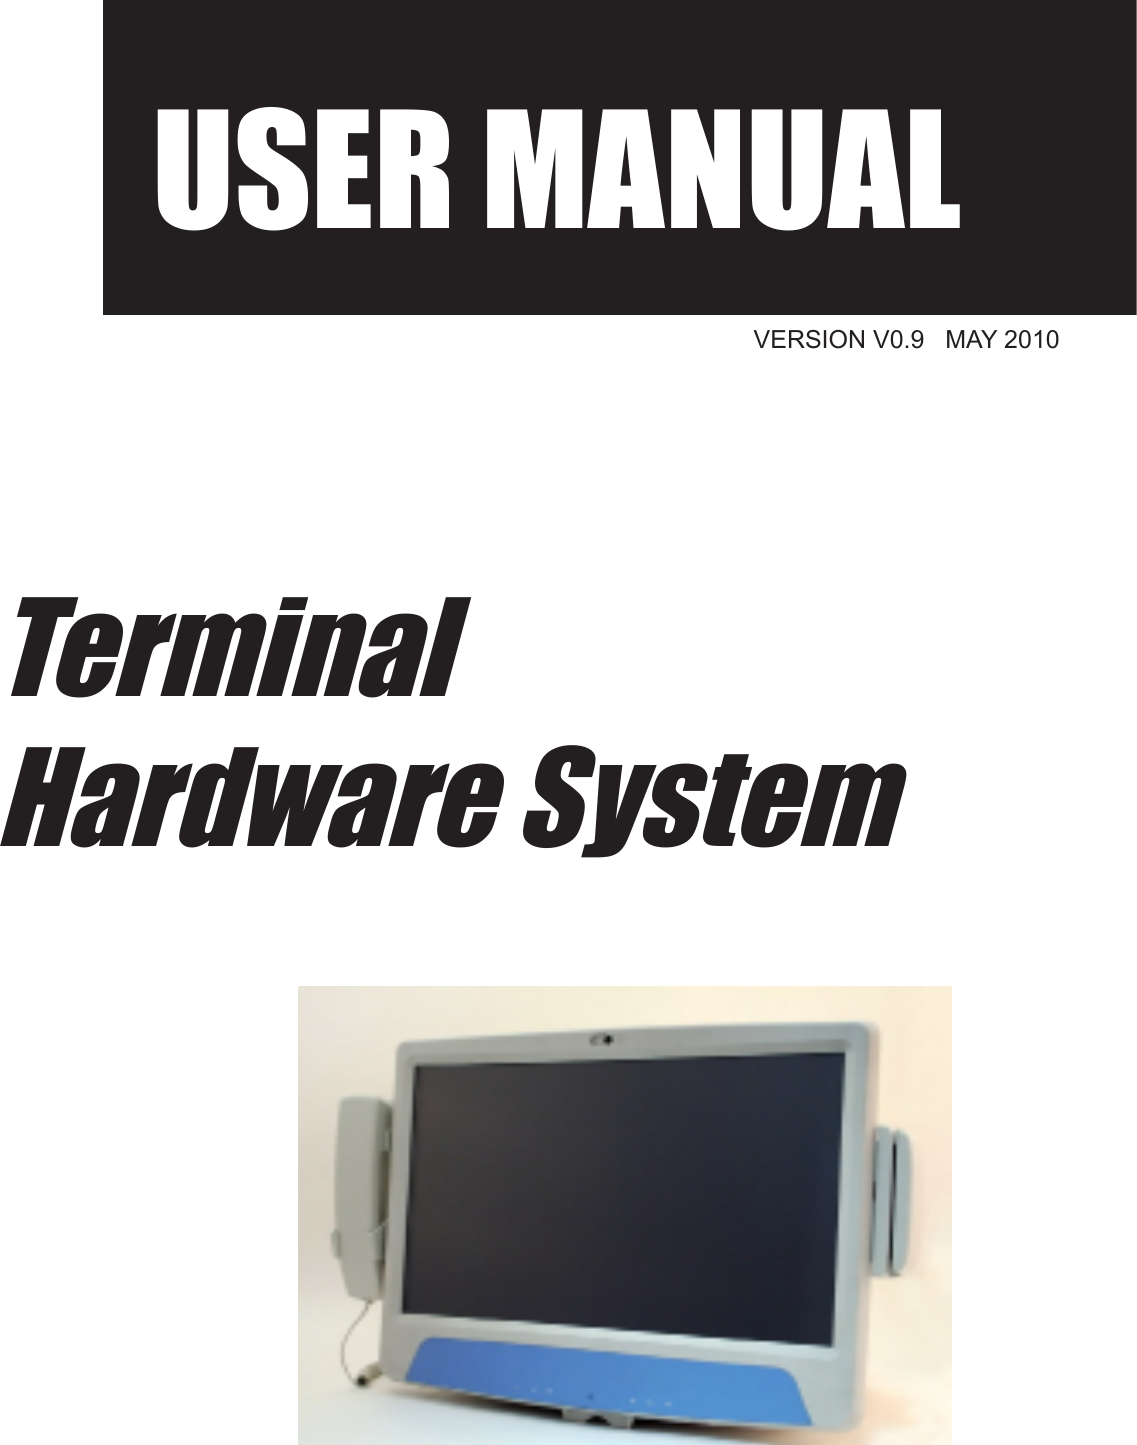 USER MANUALTerminalHardware SystemVERSION V0.9   MAY 2010